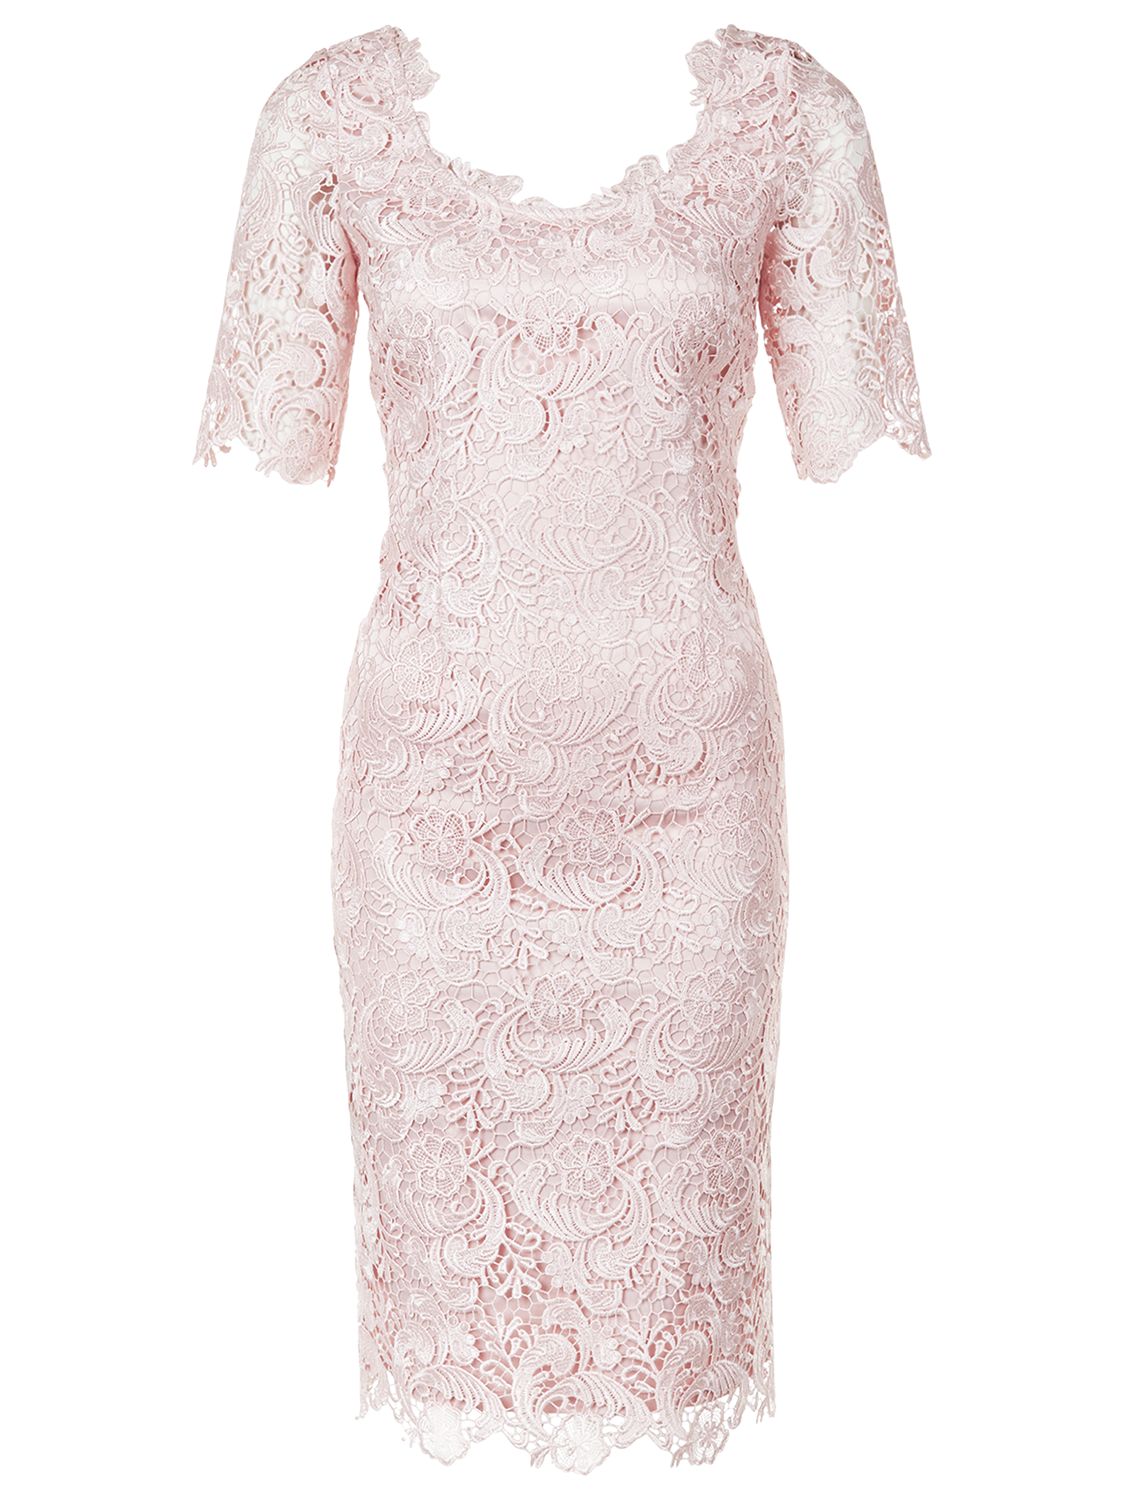 Jacques Vert Luxury Lace Dress, Light Pink at John Lewis & Partners